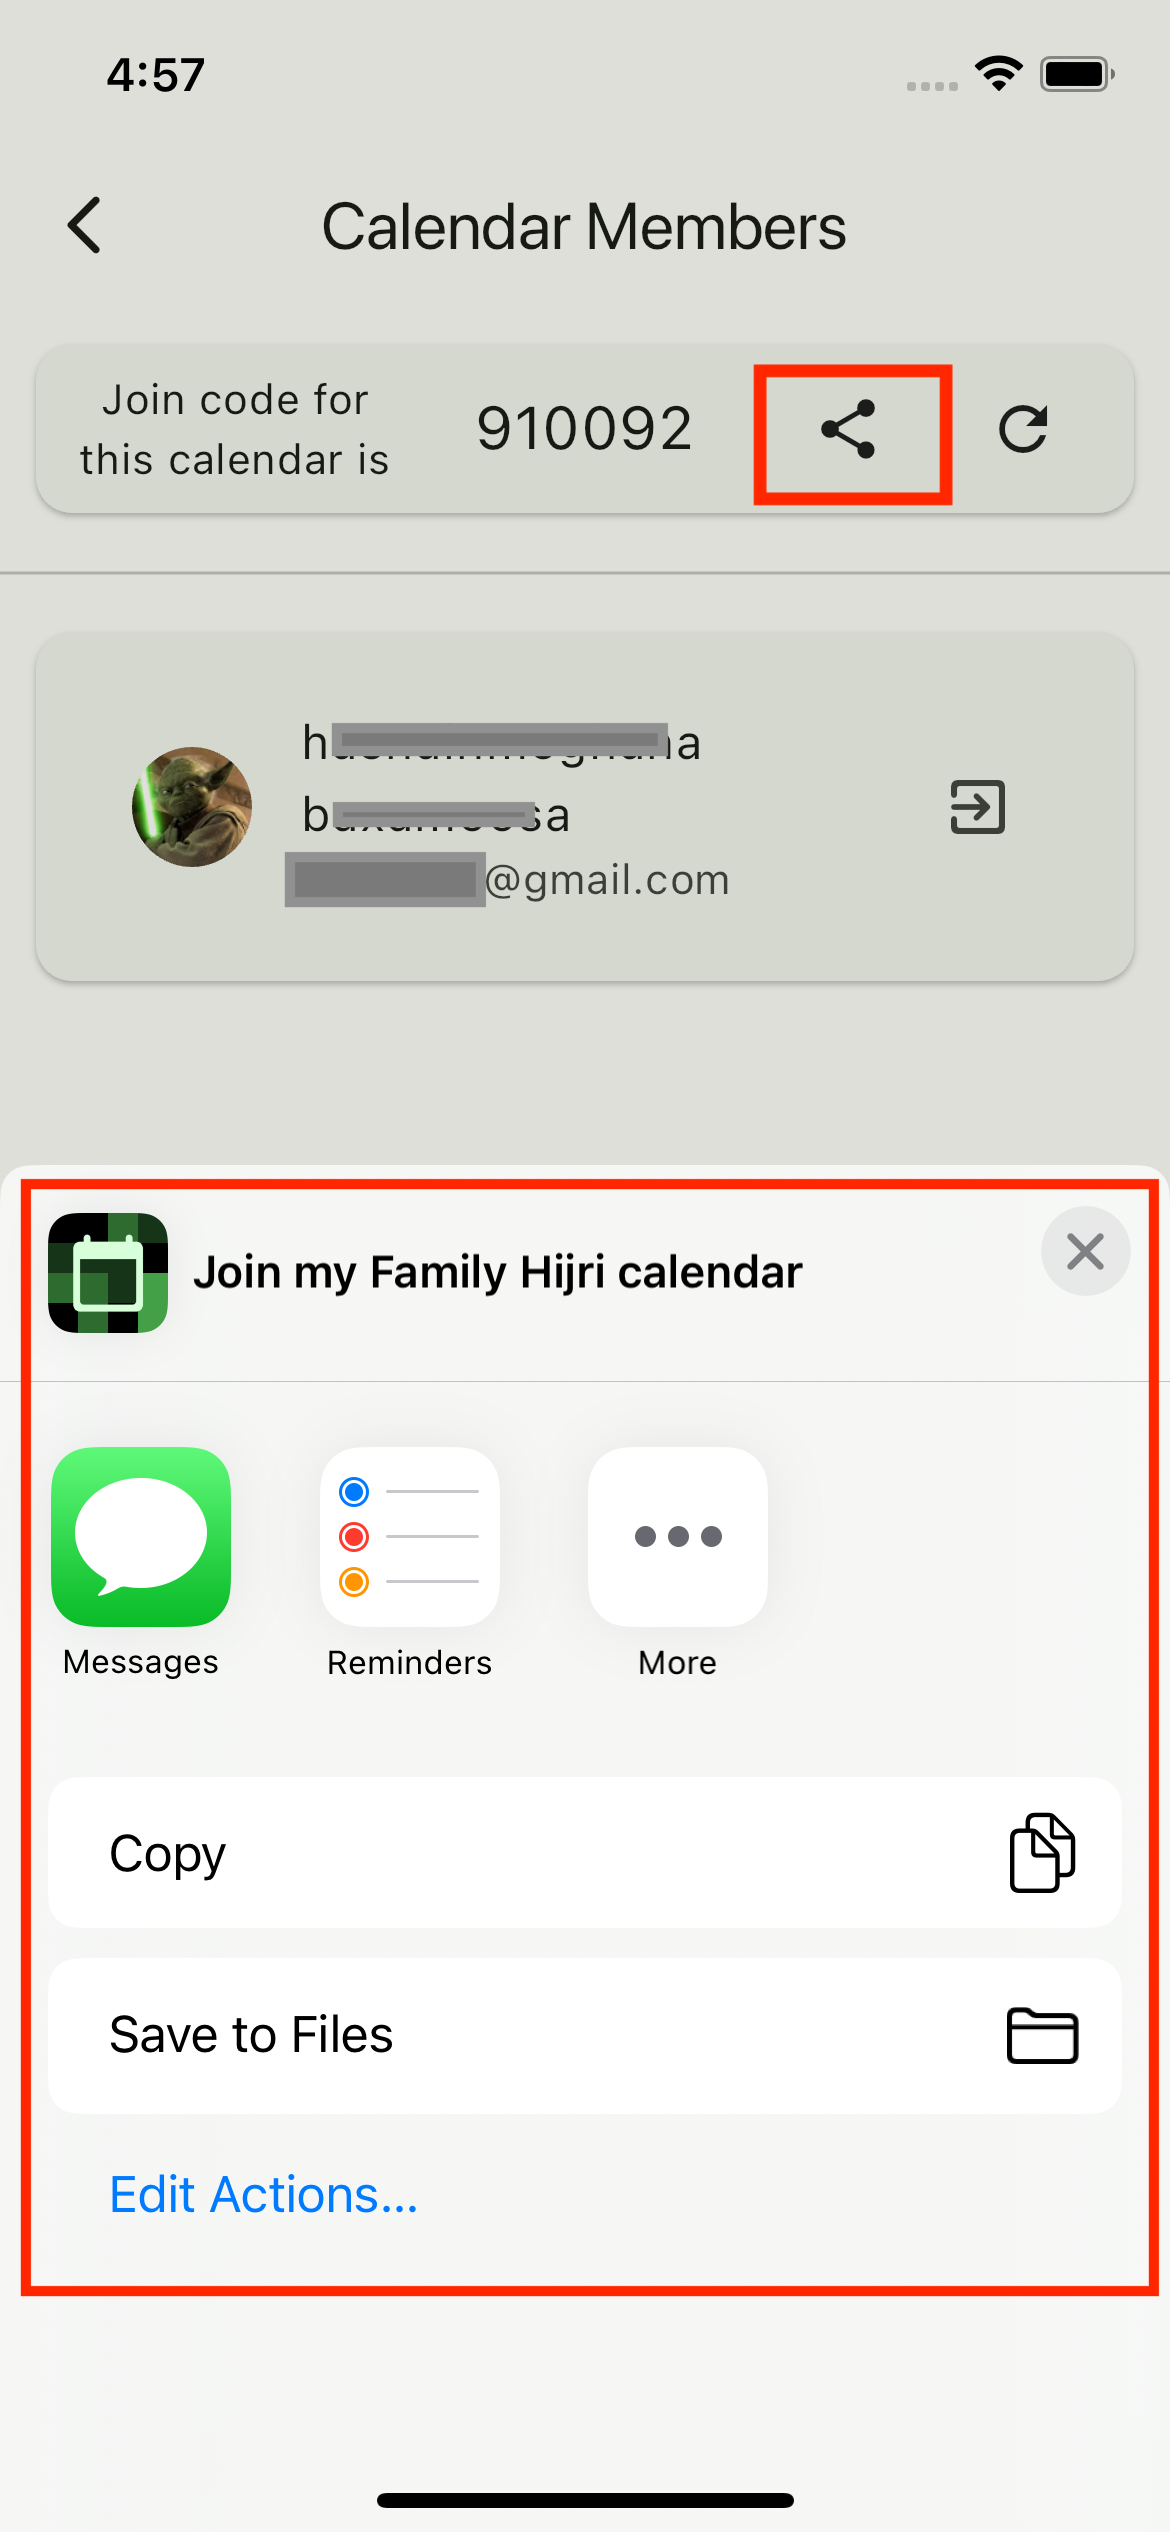 Hijri Calendar App - Calendar Sharing